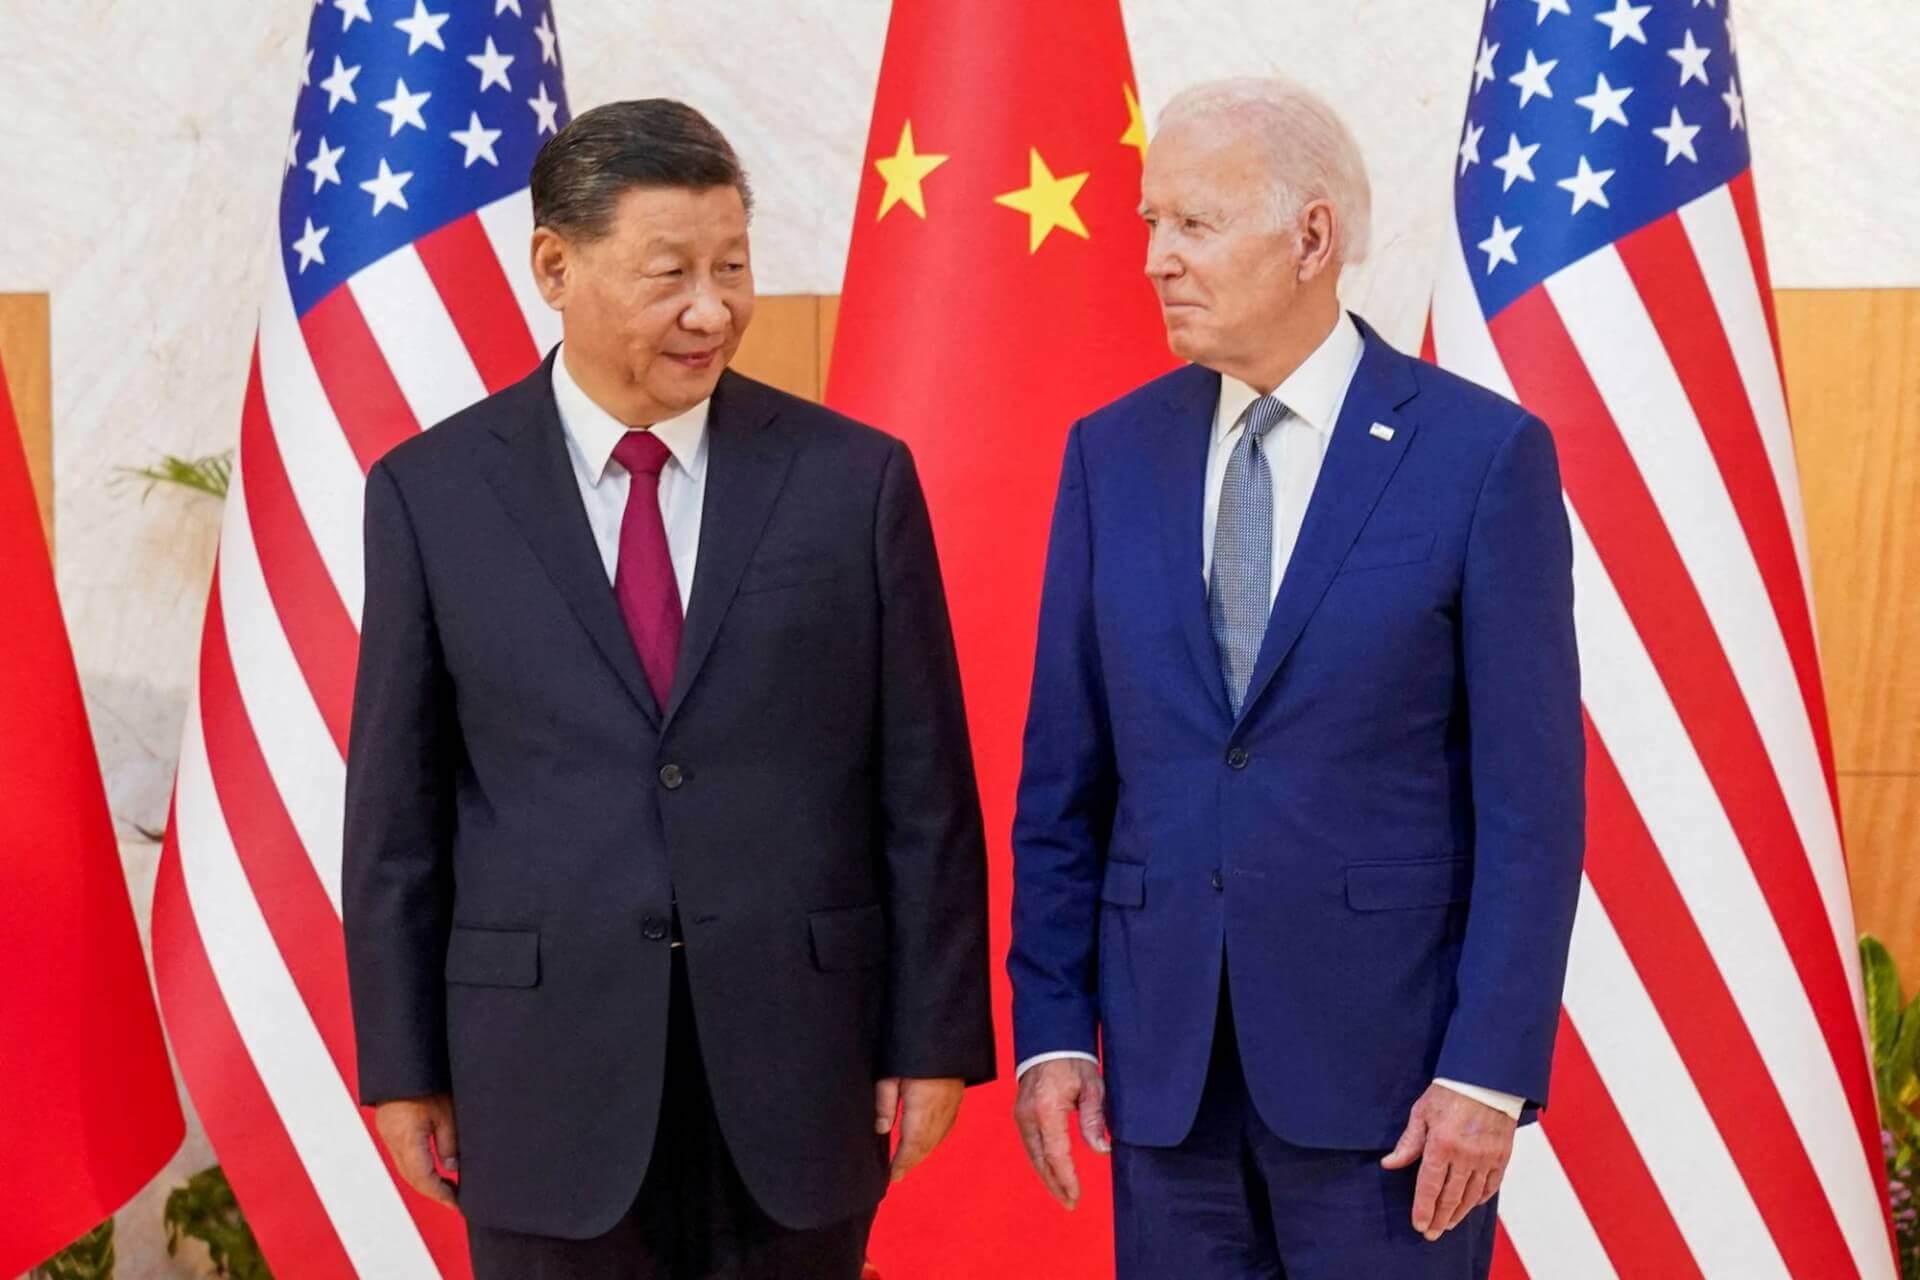 China Slams US Pres Biden for Calling Xi Jinping a “Dictator”